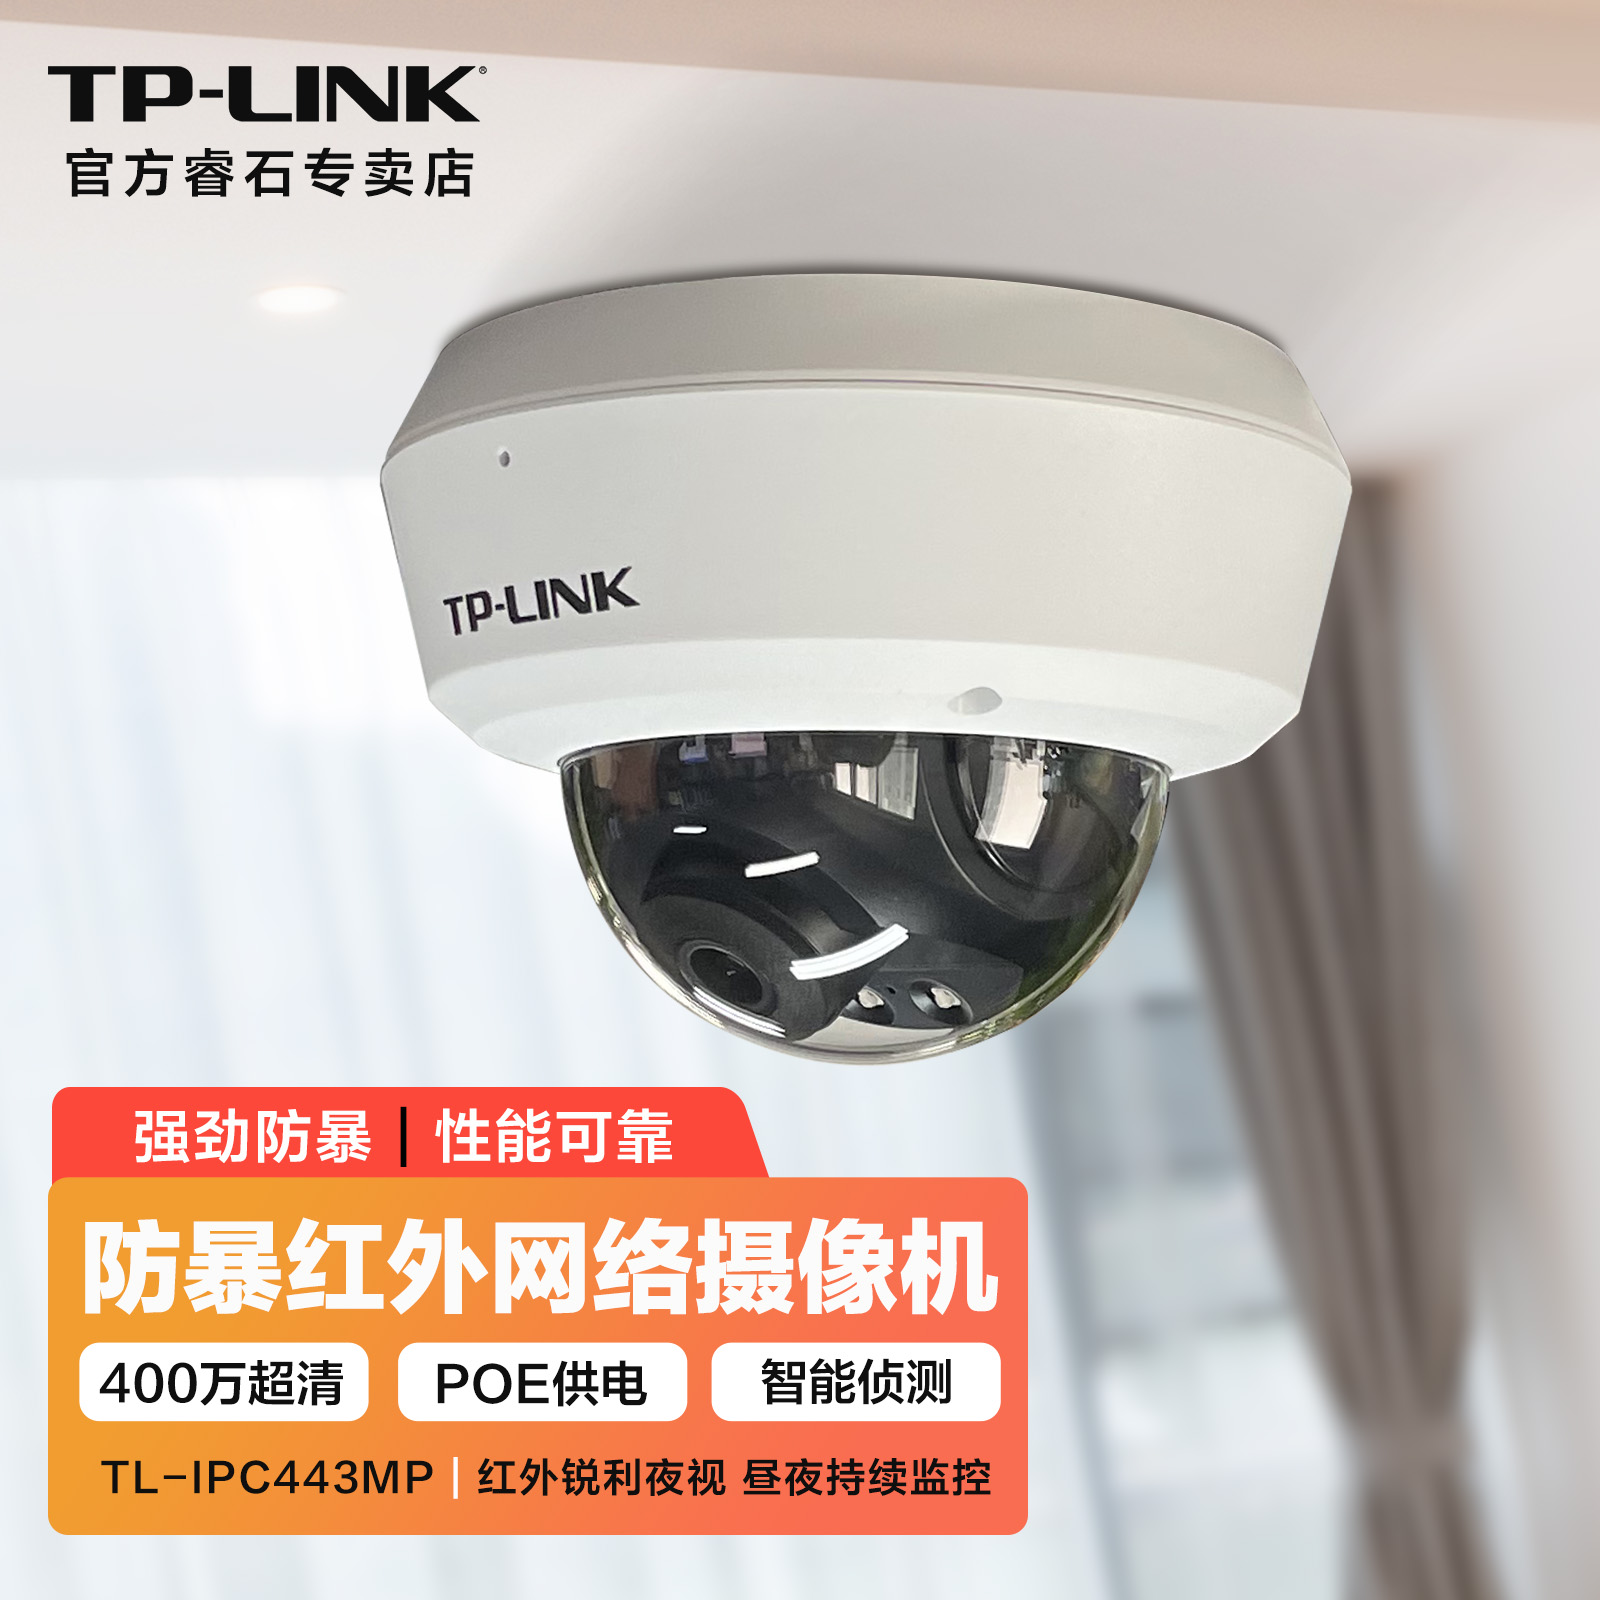 TP-LINK监控防暴摄像头高清红外夜视POE供电吸顶半球室内商用超市